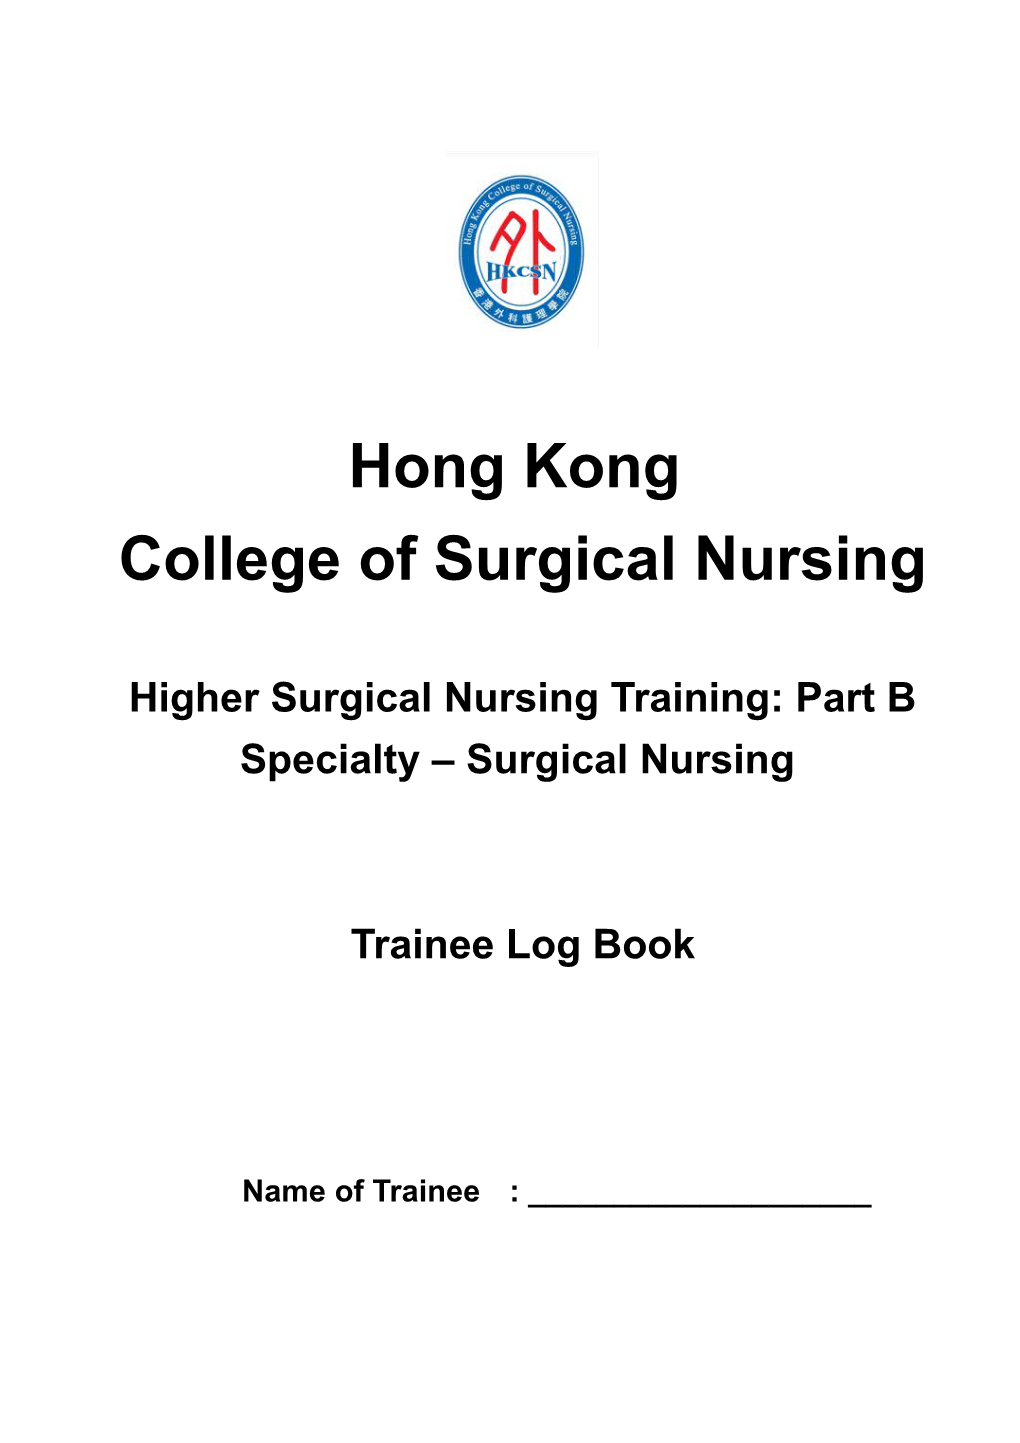 Higher Surgical Nursing Training: Part B